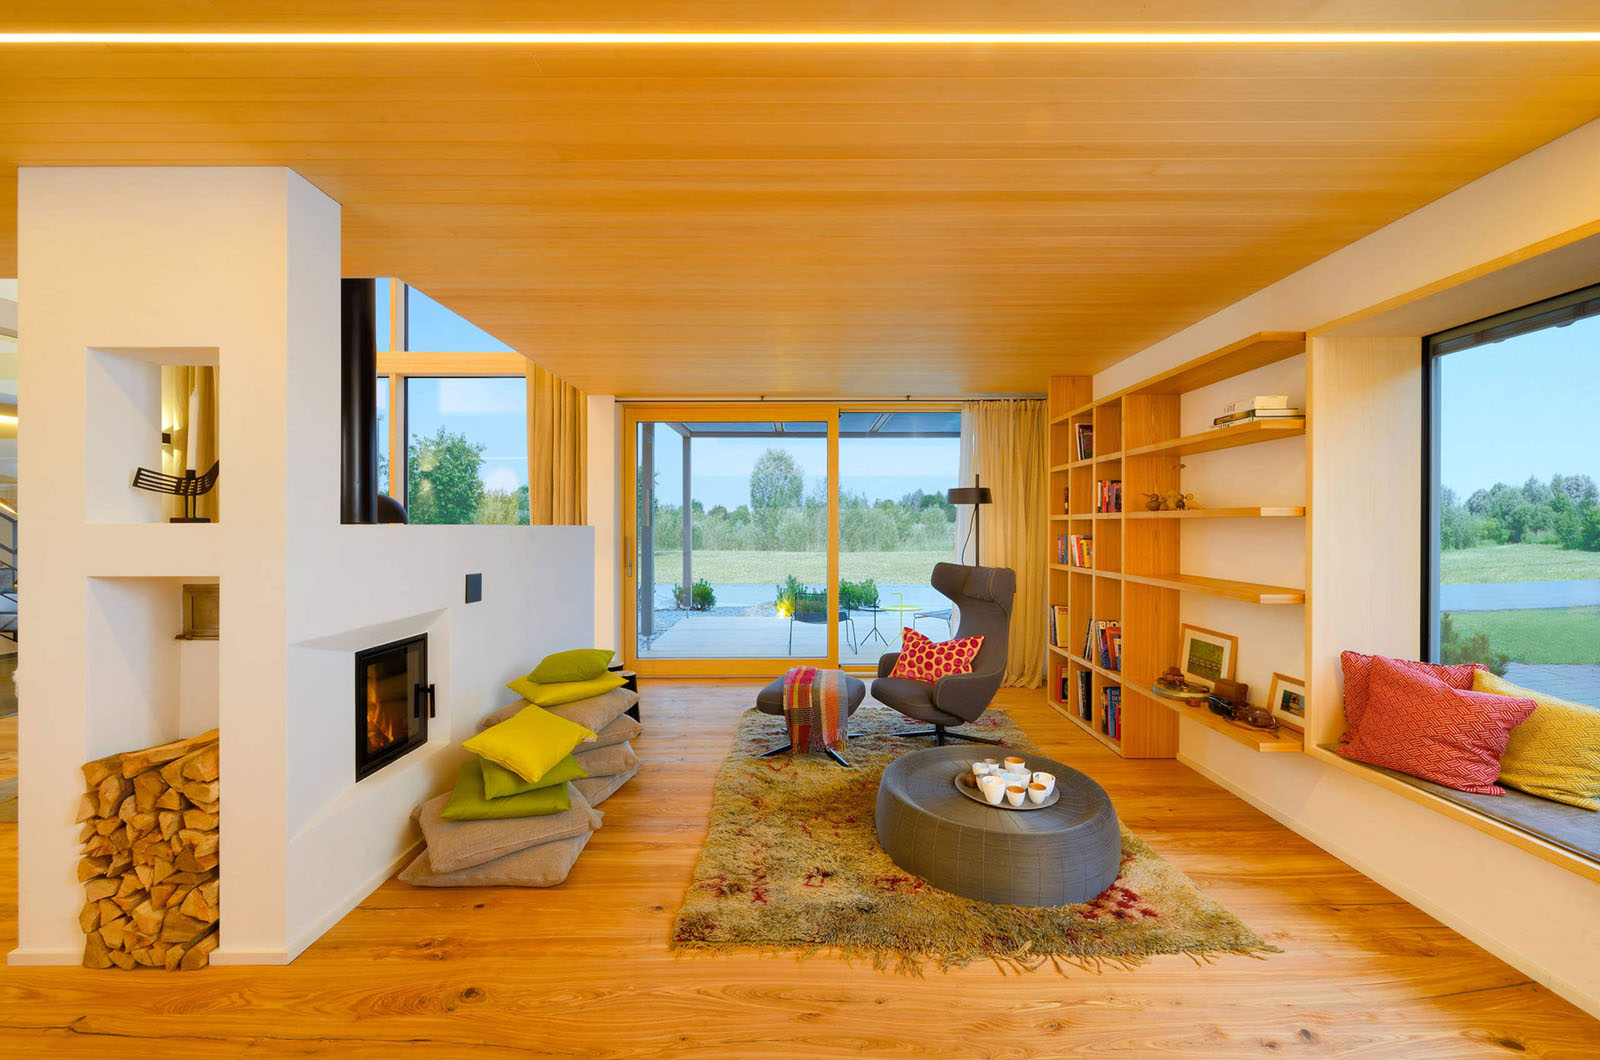 Bauhaus Inspired Energy Saving House With Modern Alpine Charm